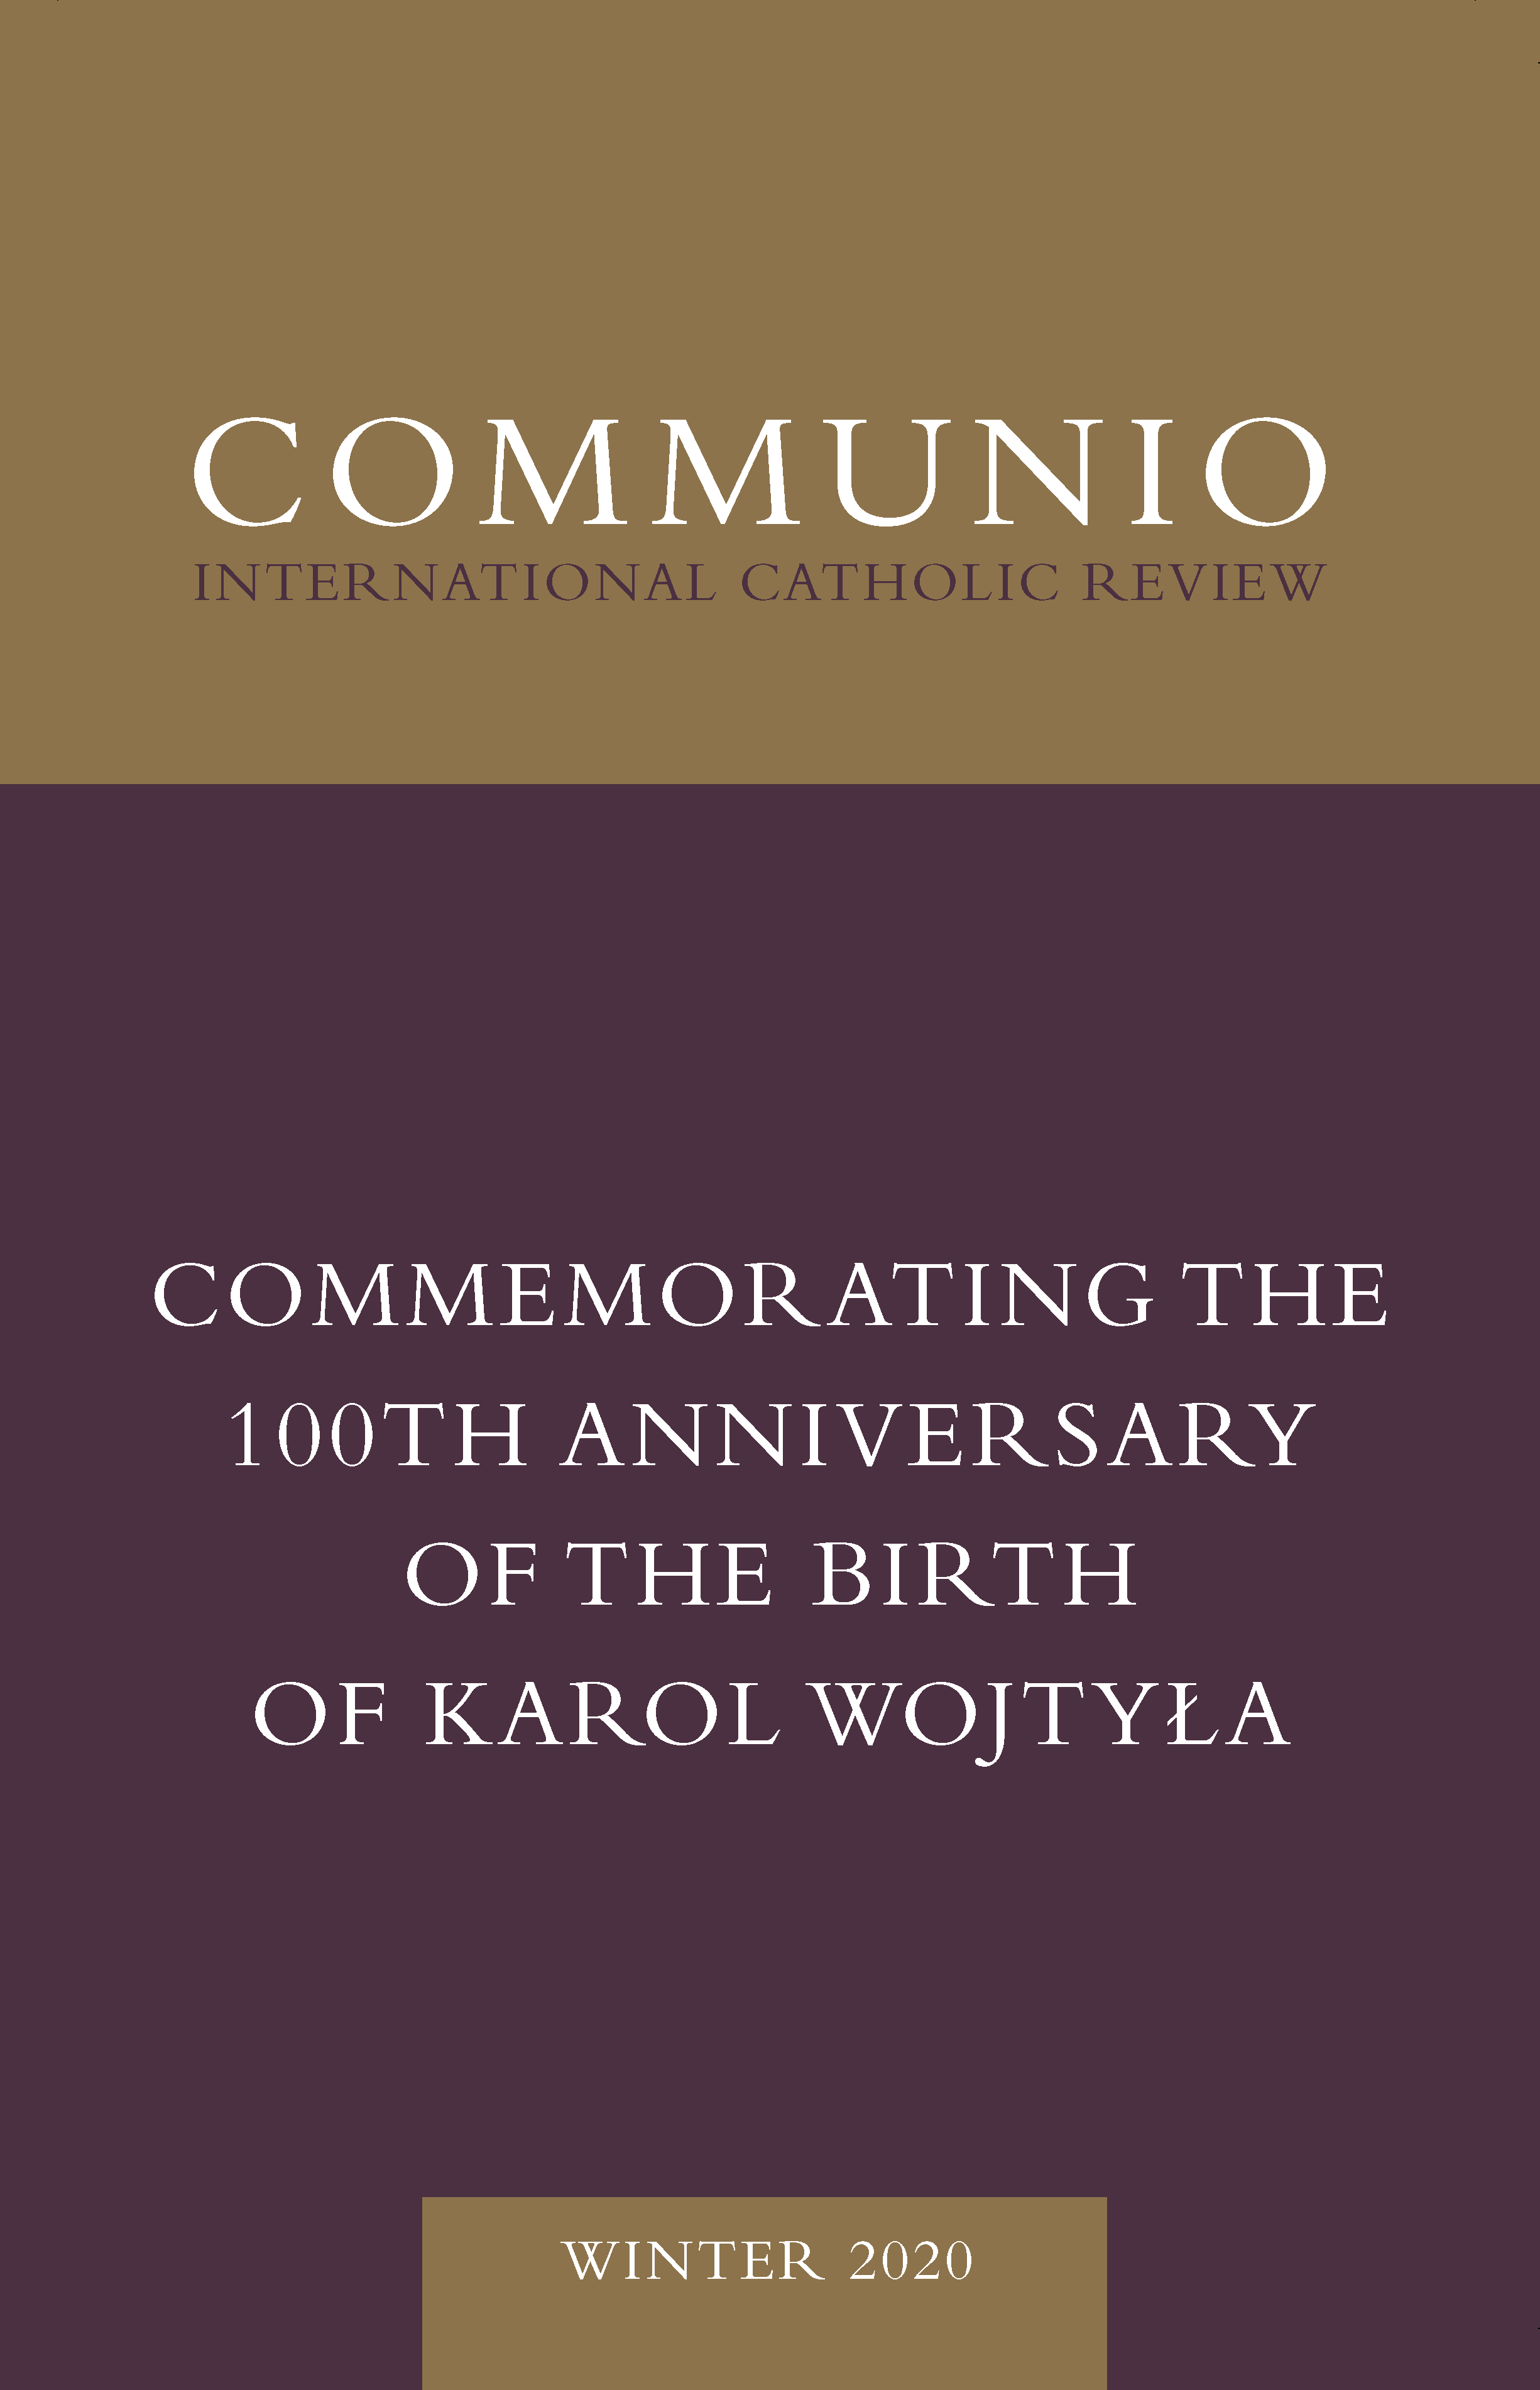 Communio - Winter 2020 - Commemorating the 100th Anniversary of the Birth of Karol Wojtyła